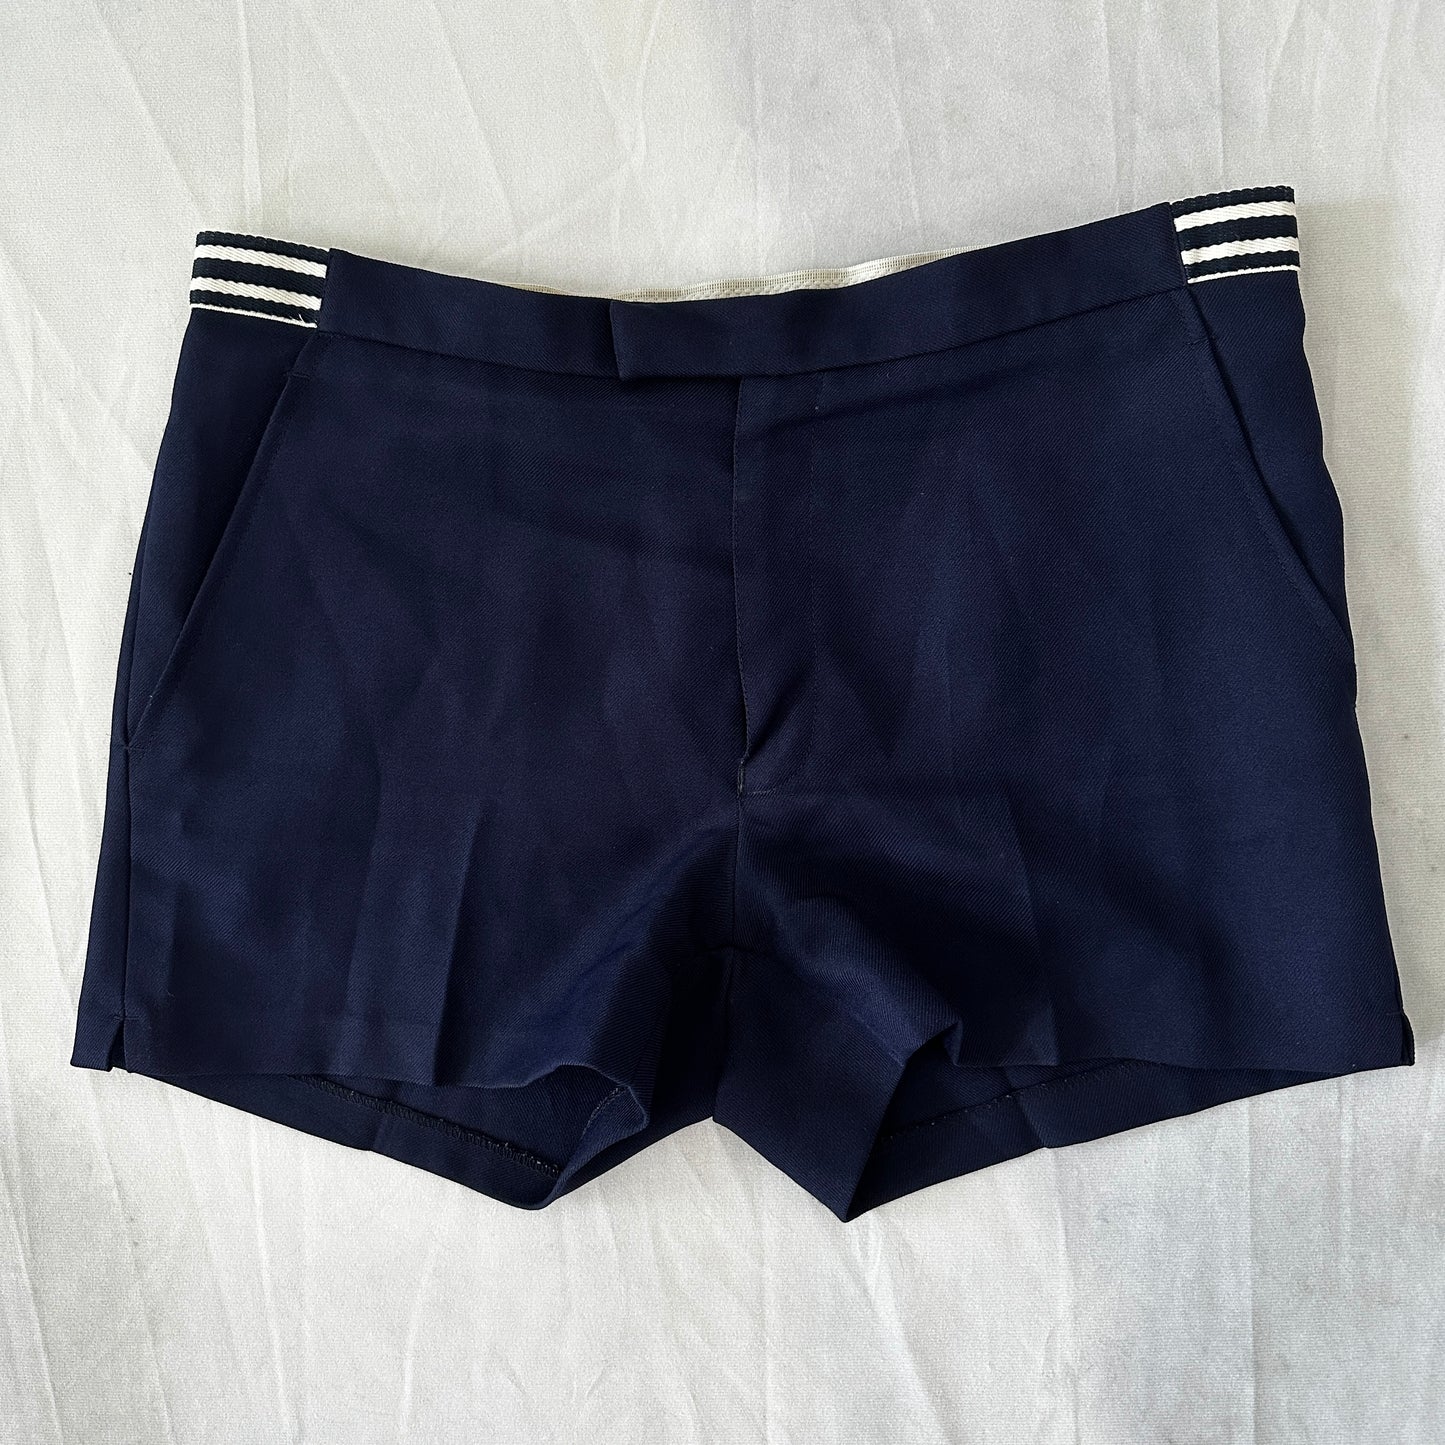 80s Vintage Tennis Shorts - Navy - M